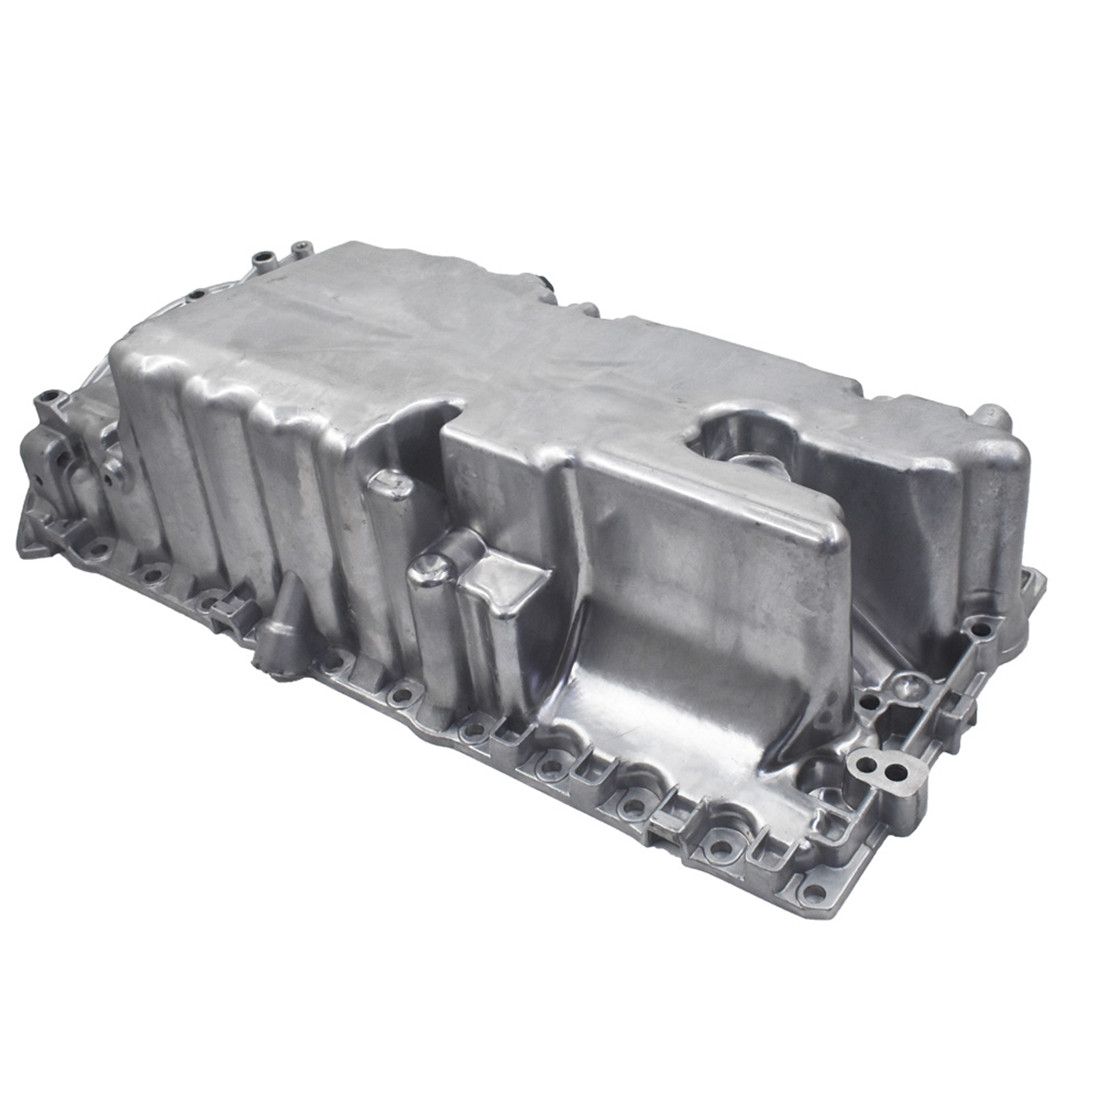 Engine Oil Pan 30777739 30777912, Fit for Volvo C30 C70 S40 V50 2.4L 2.5L,  Aluminum